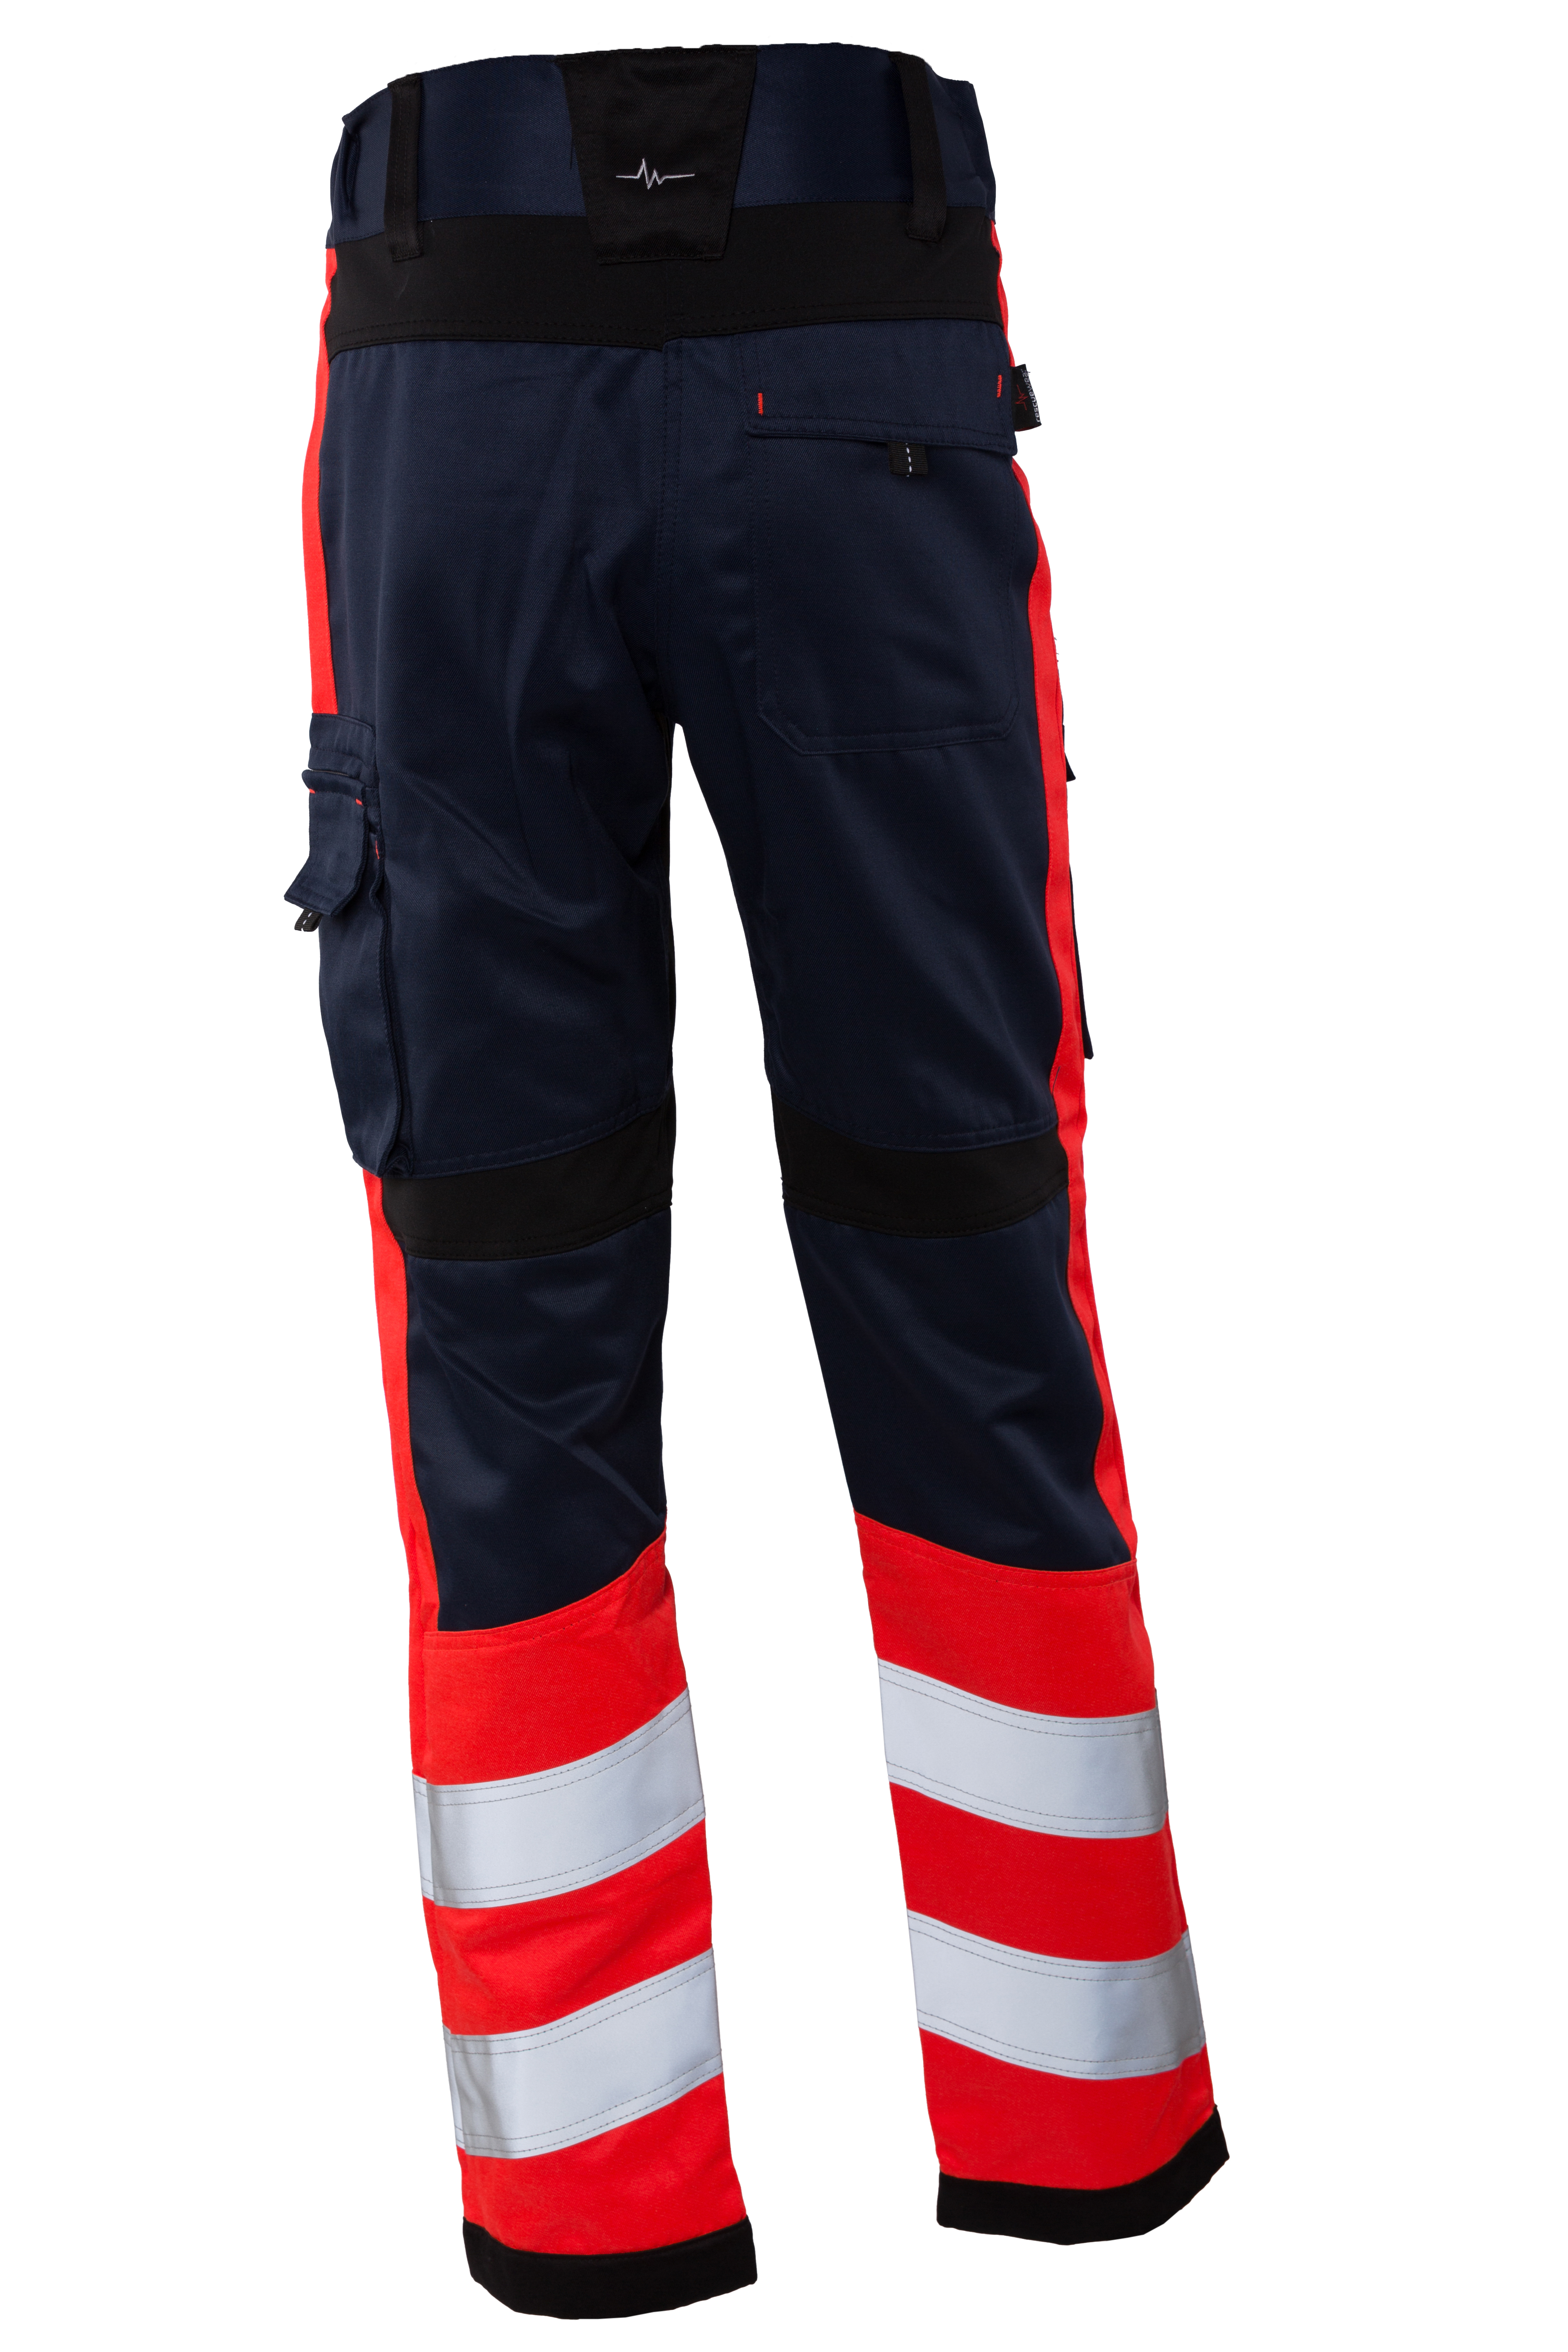 Rescuewear Damen Hose 33416V2SWLAD Stretch HiVis Klasse 1 Marineblau / Schwarz / Neon Rot